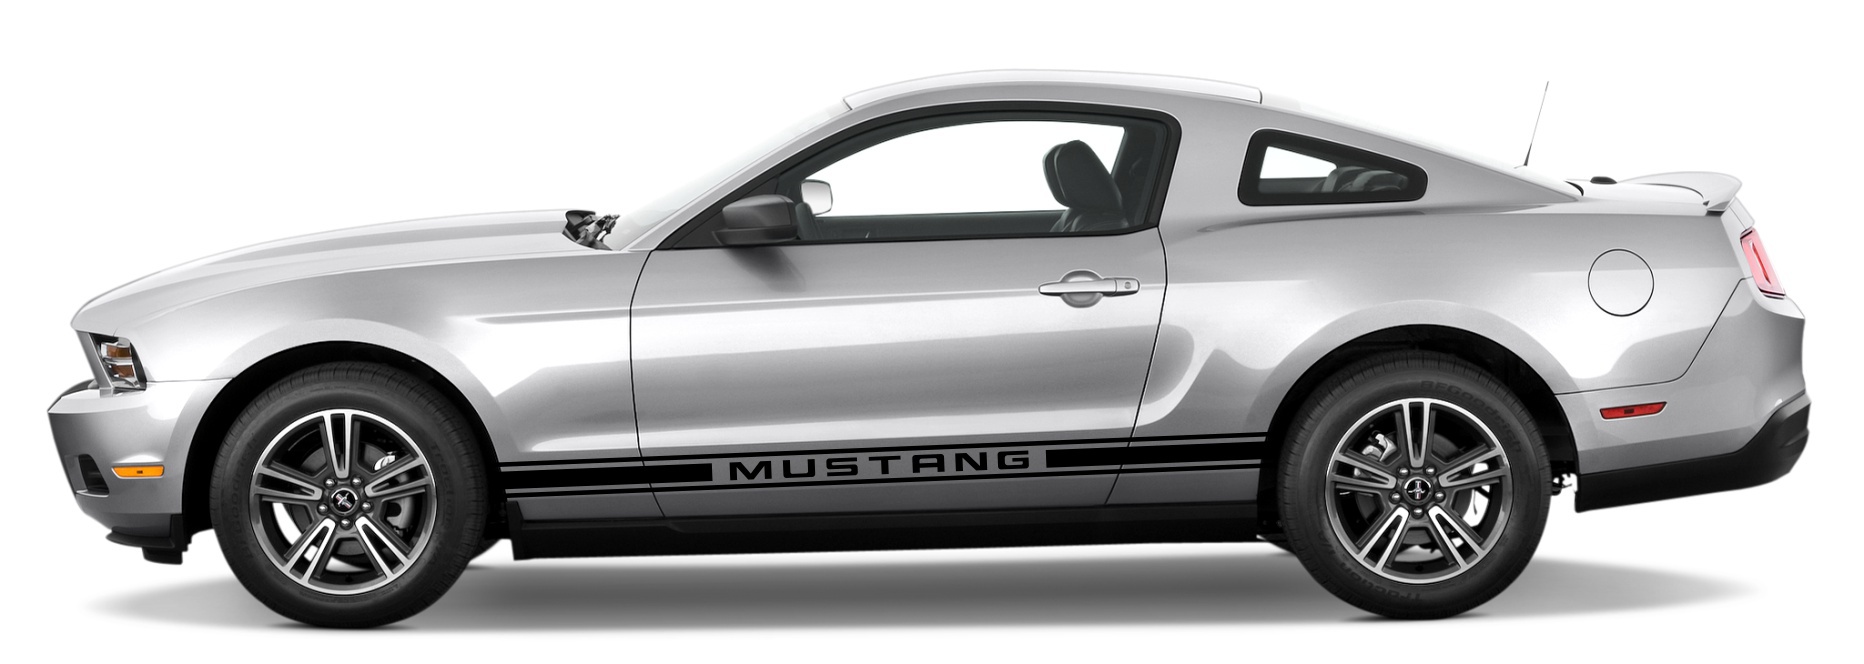 Naklejki na samochód Ford Mustang GT STICKER DECALS STRIPES